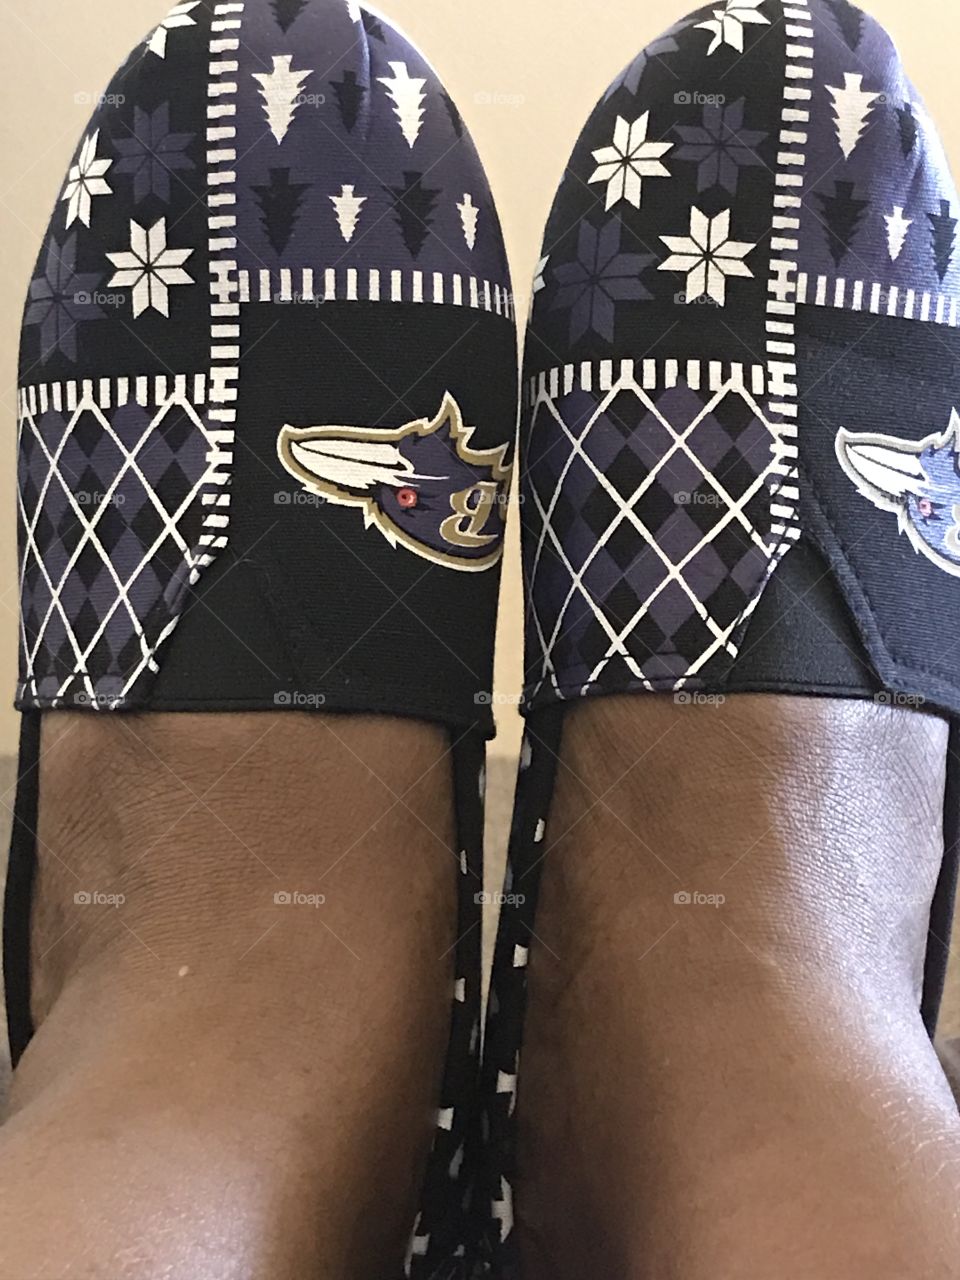 Baltimore Ravens Football Team Shoes